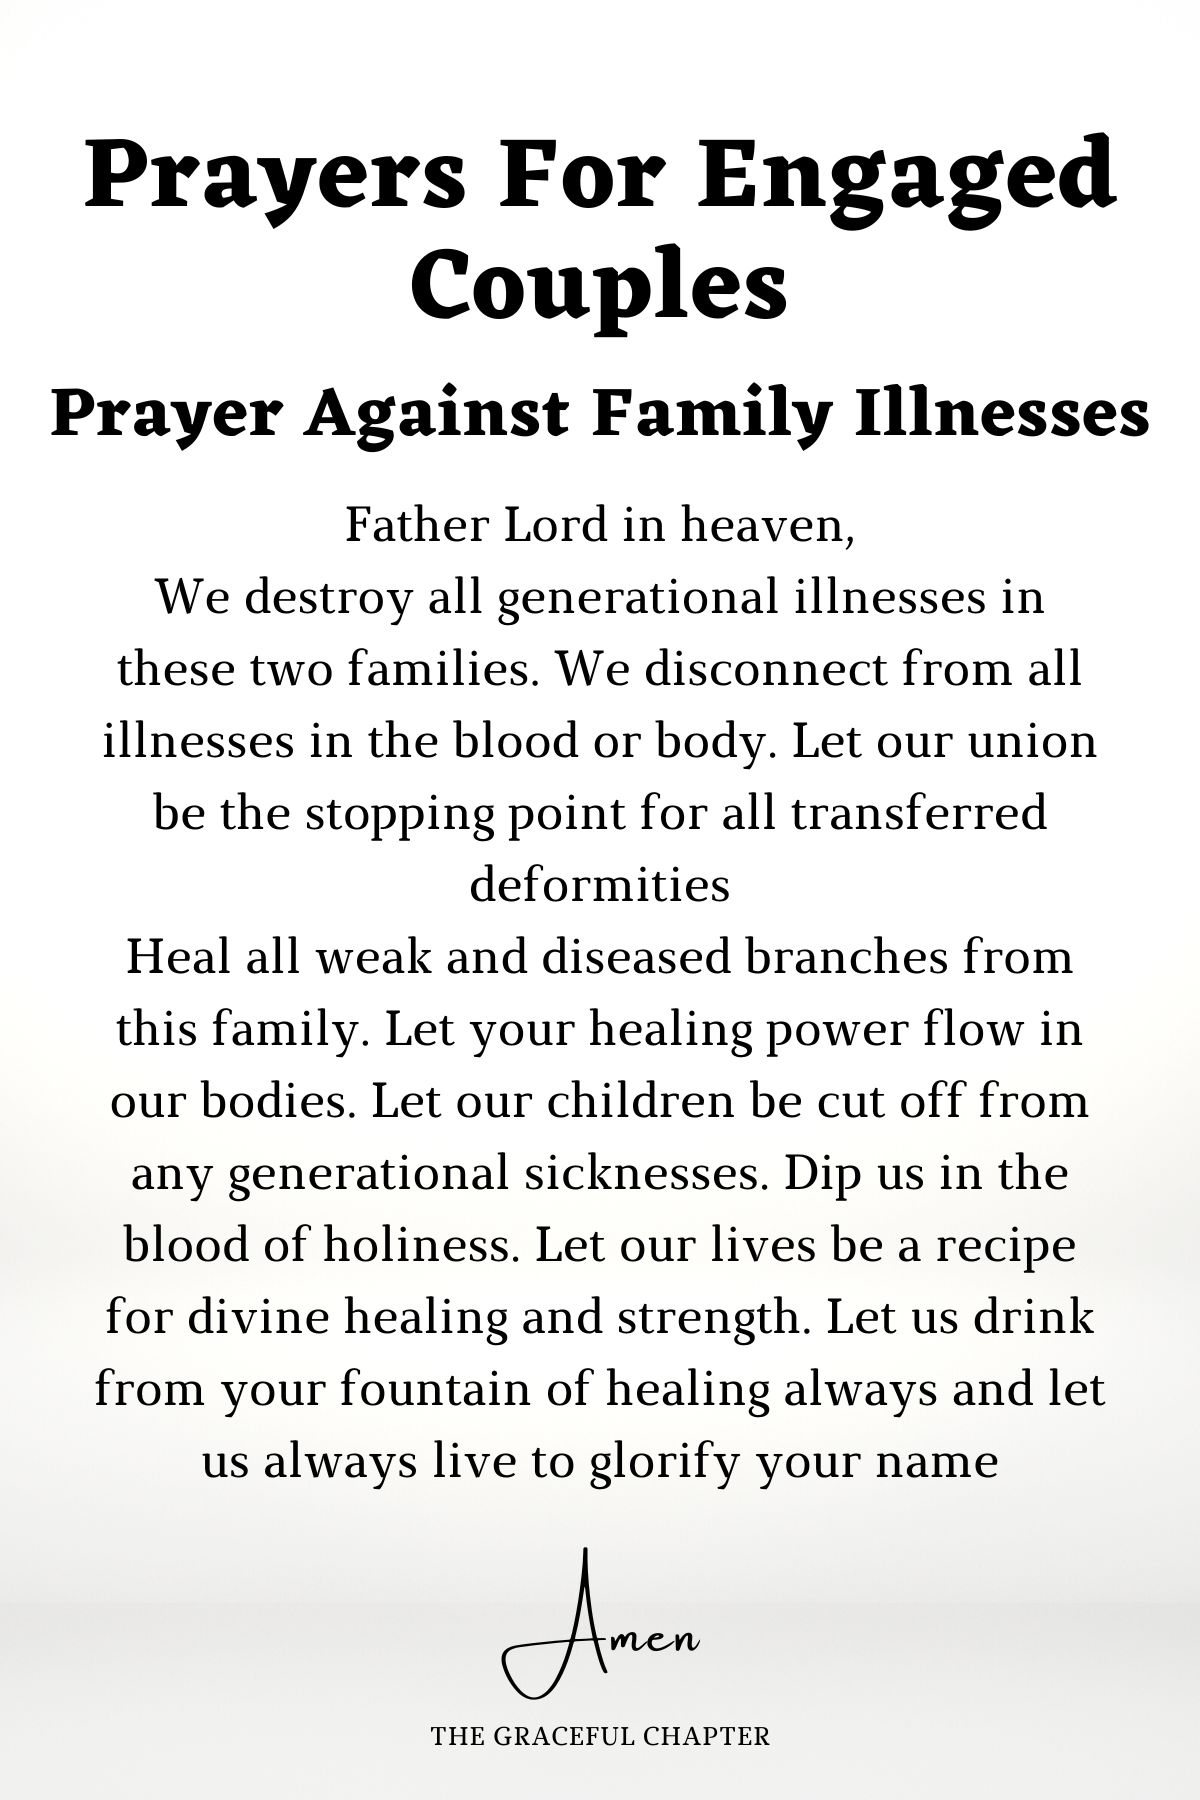  prayers for engaged couples 
 Prayer against family illnesses